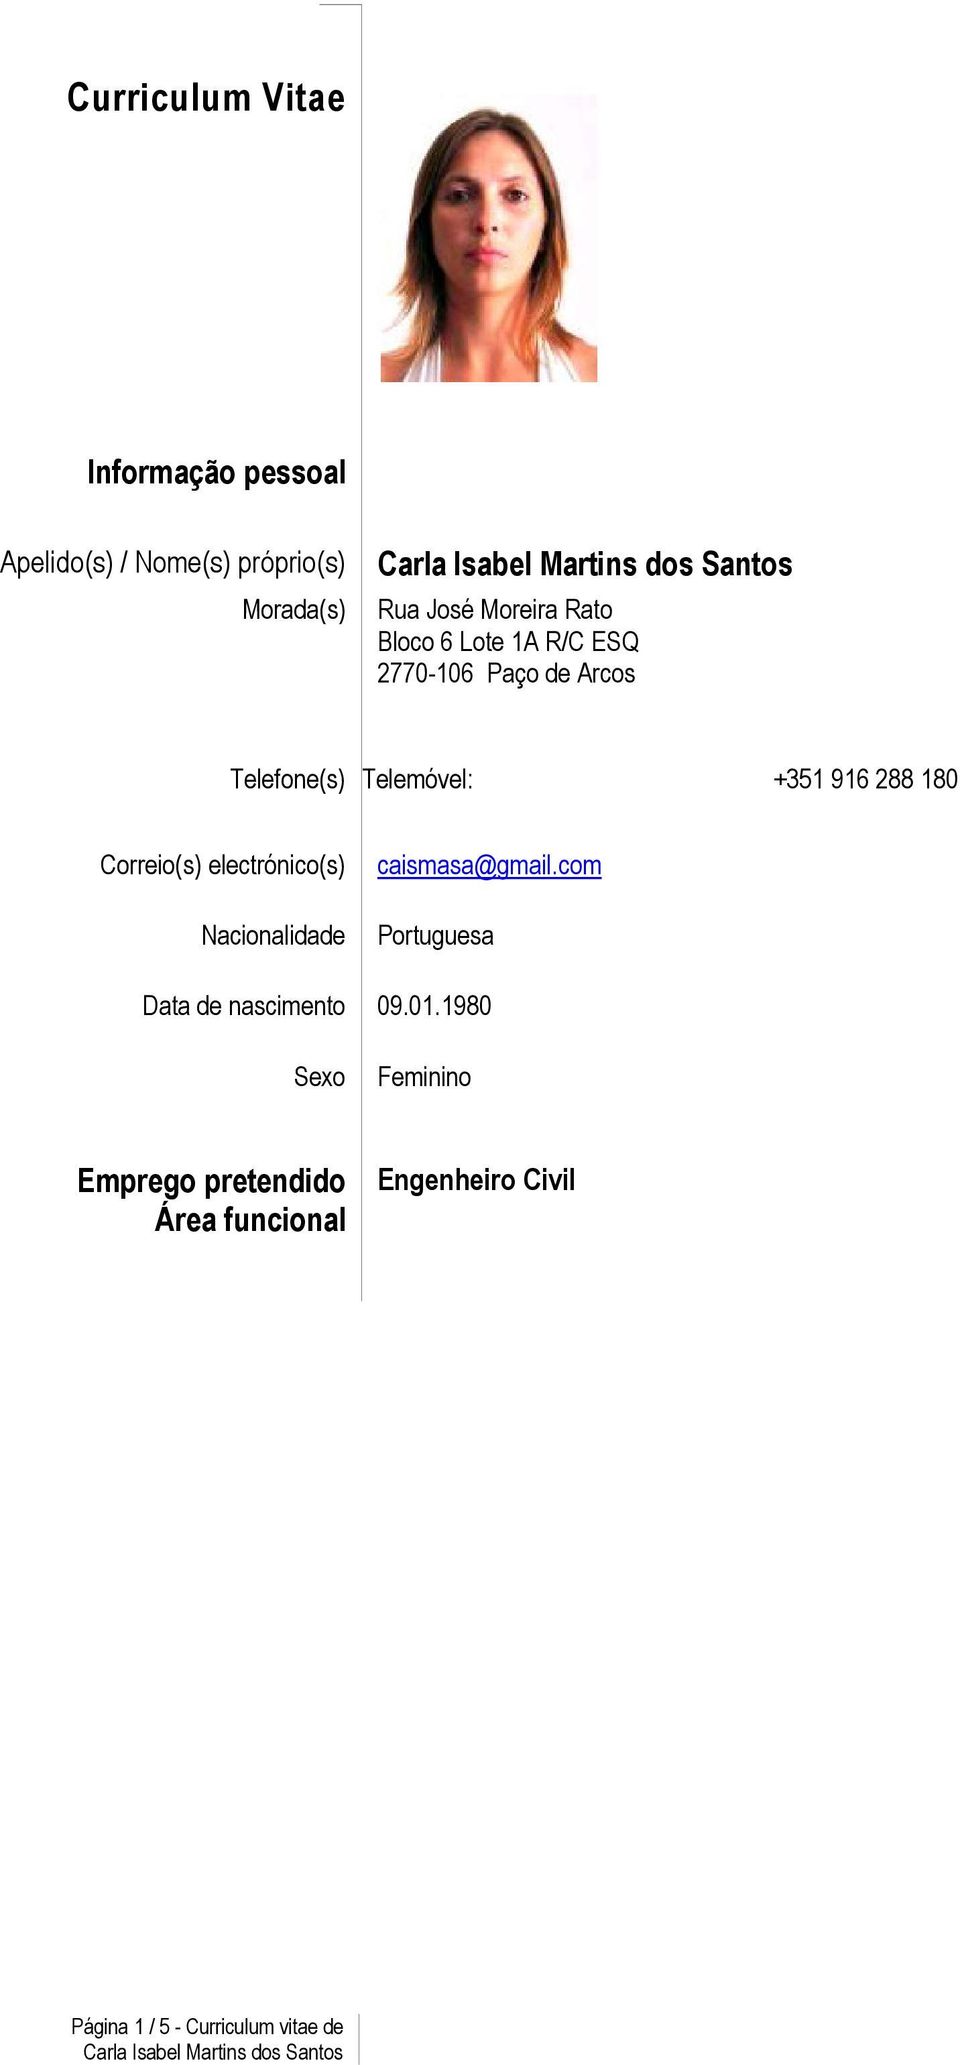 Correio(s) electrónico(s) Nacionalidade caismasa@gmail.com Portuguesa Data de nascimento 09.01.